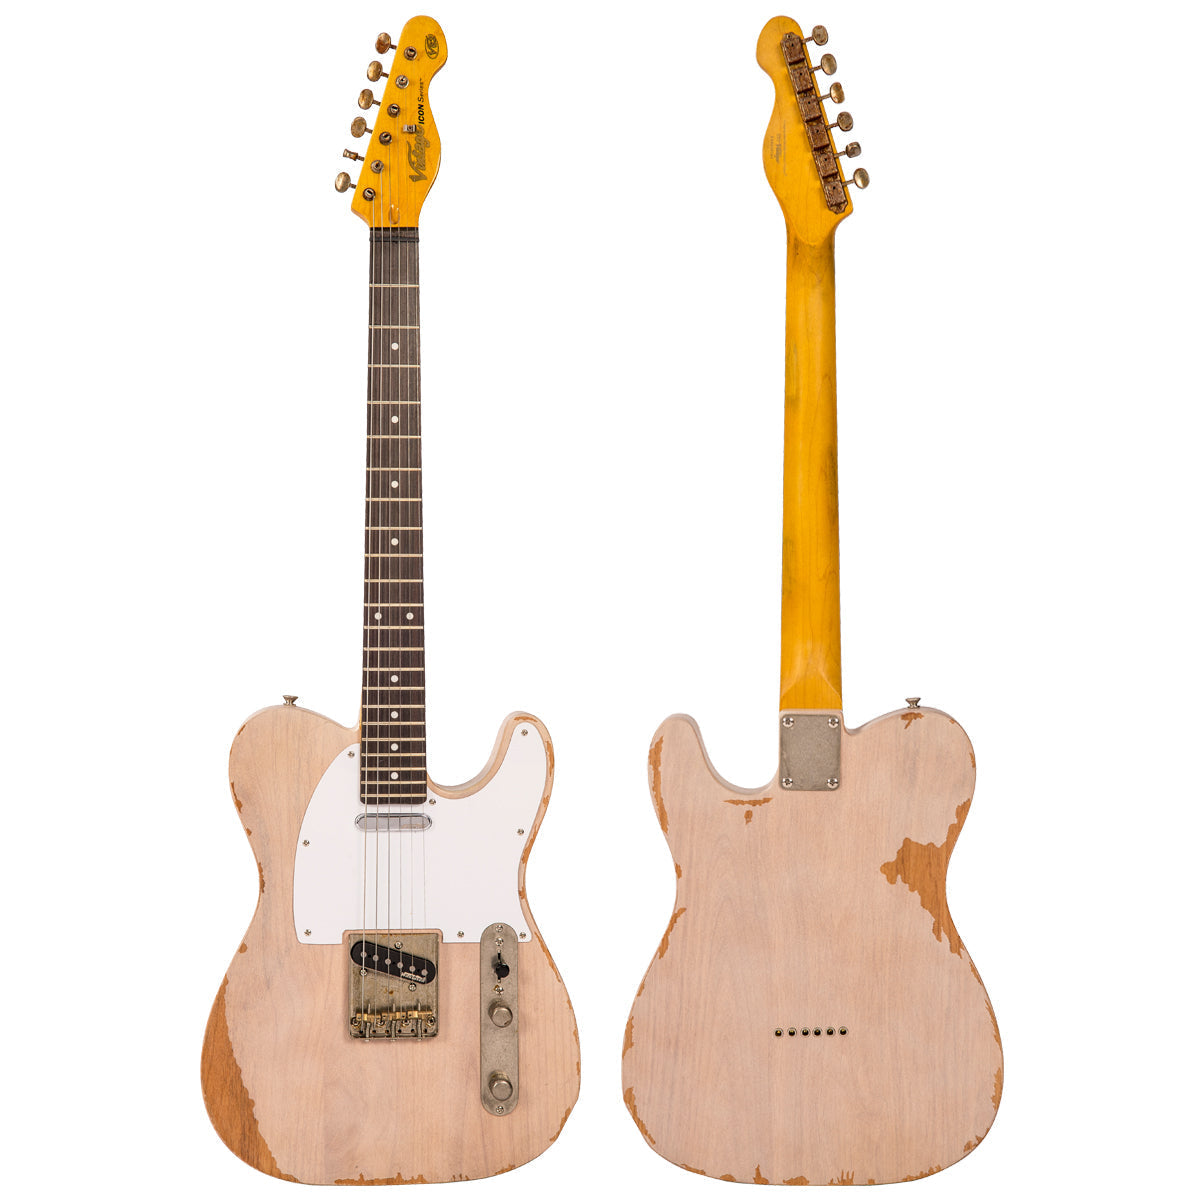 Vintage V62 ICON Electric Guitar ~ Distressed Ash Blonde, Electric Guitar for sale at Richards Guitars.